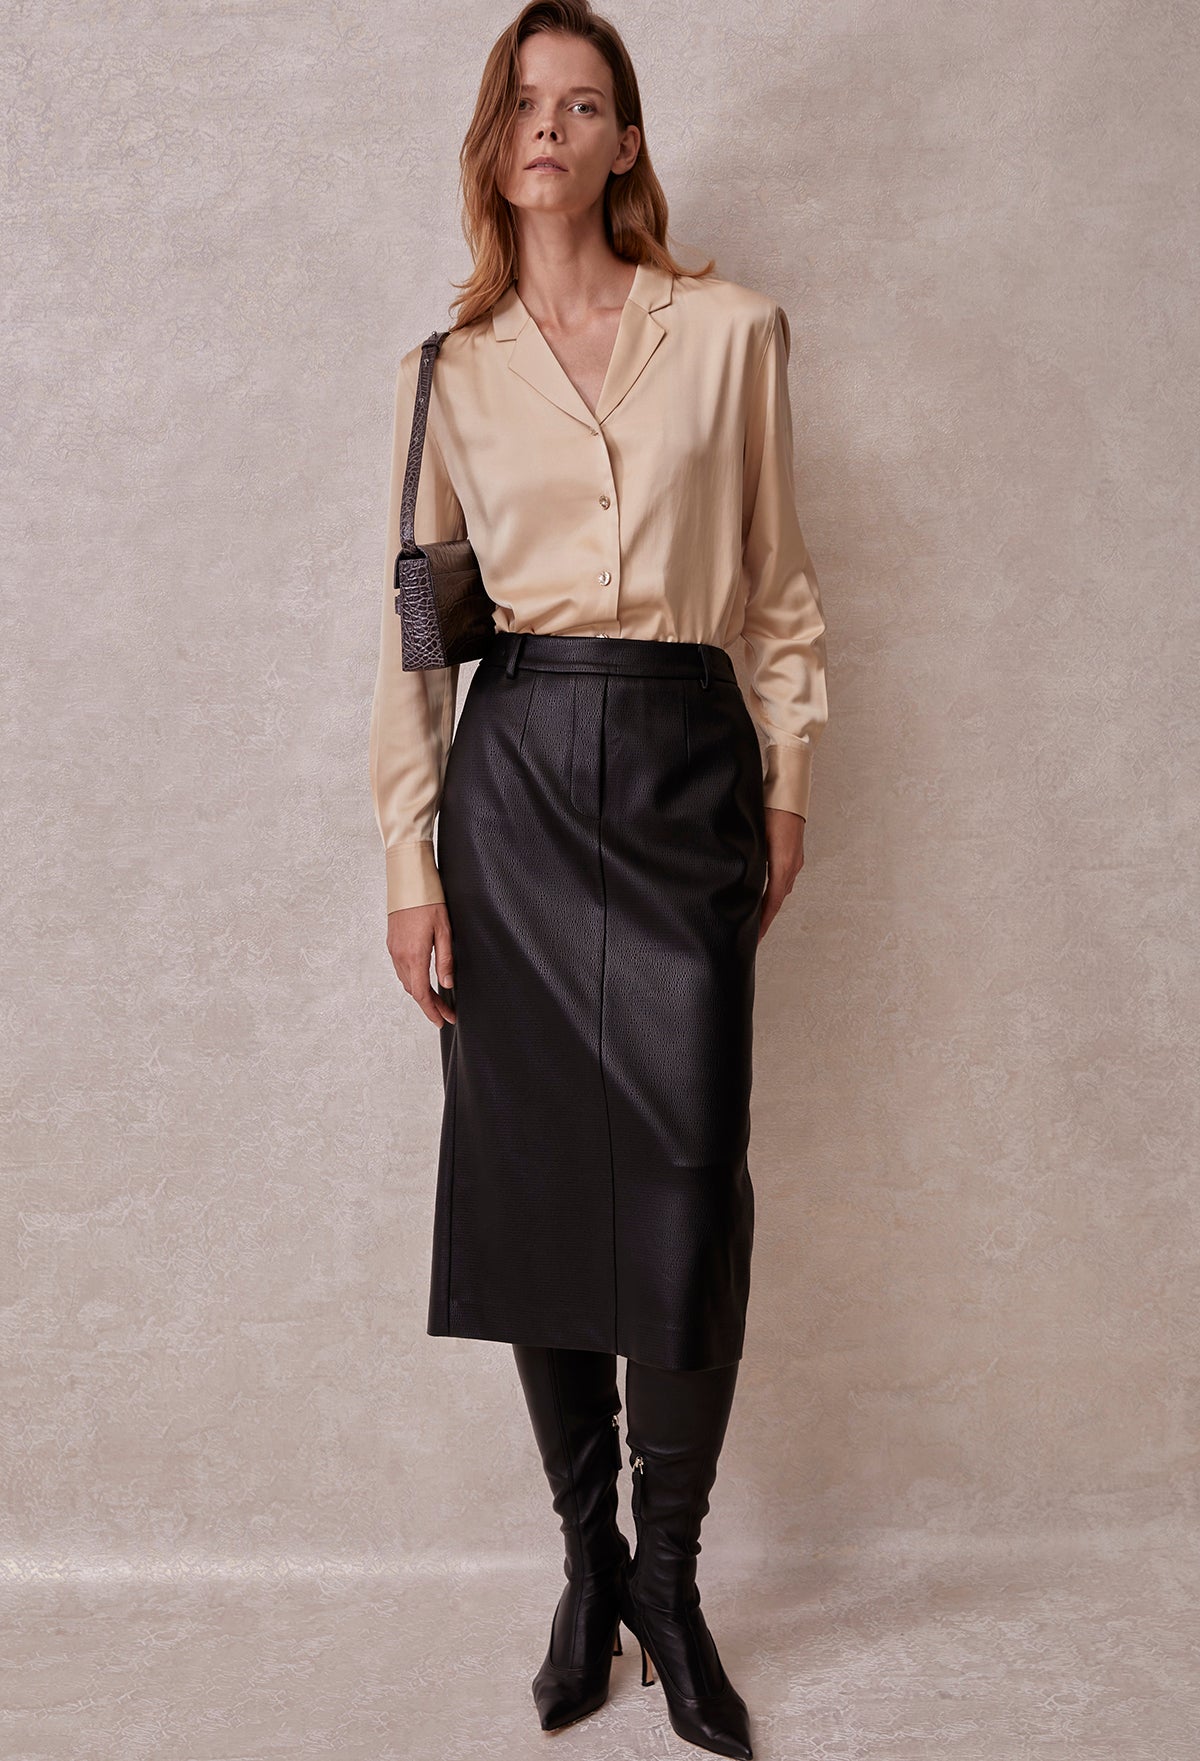 Back-slit Leather Skirt In Black